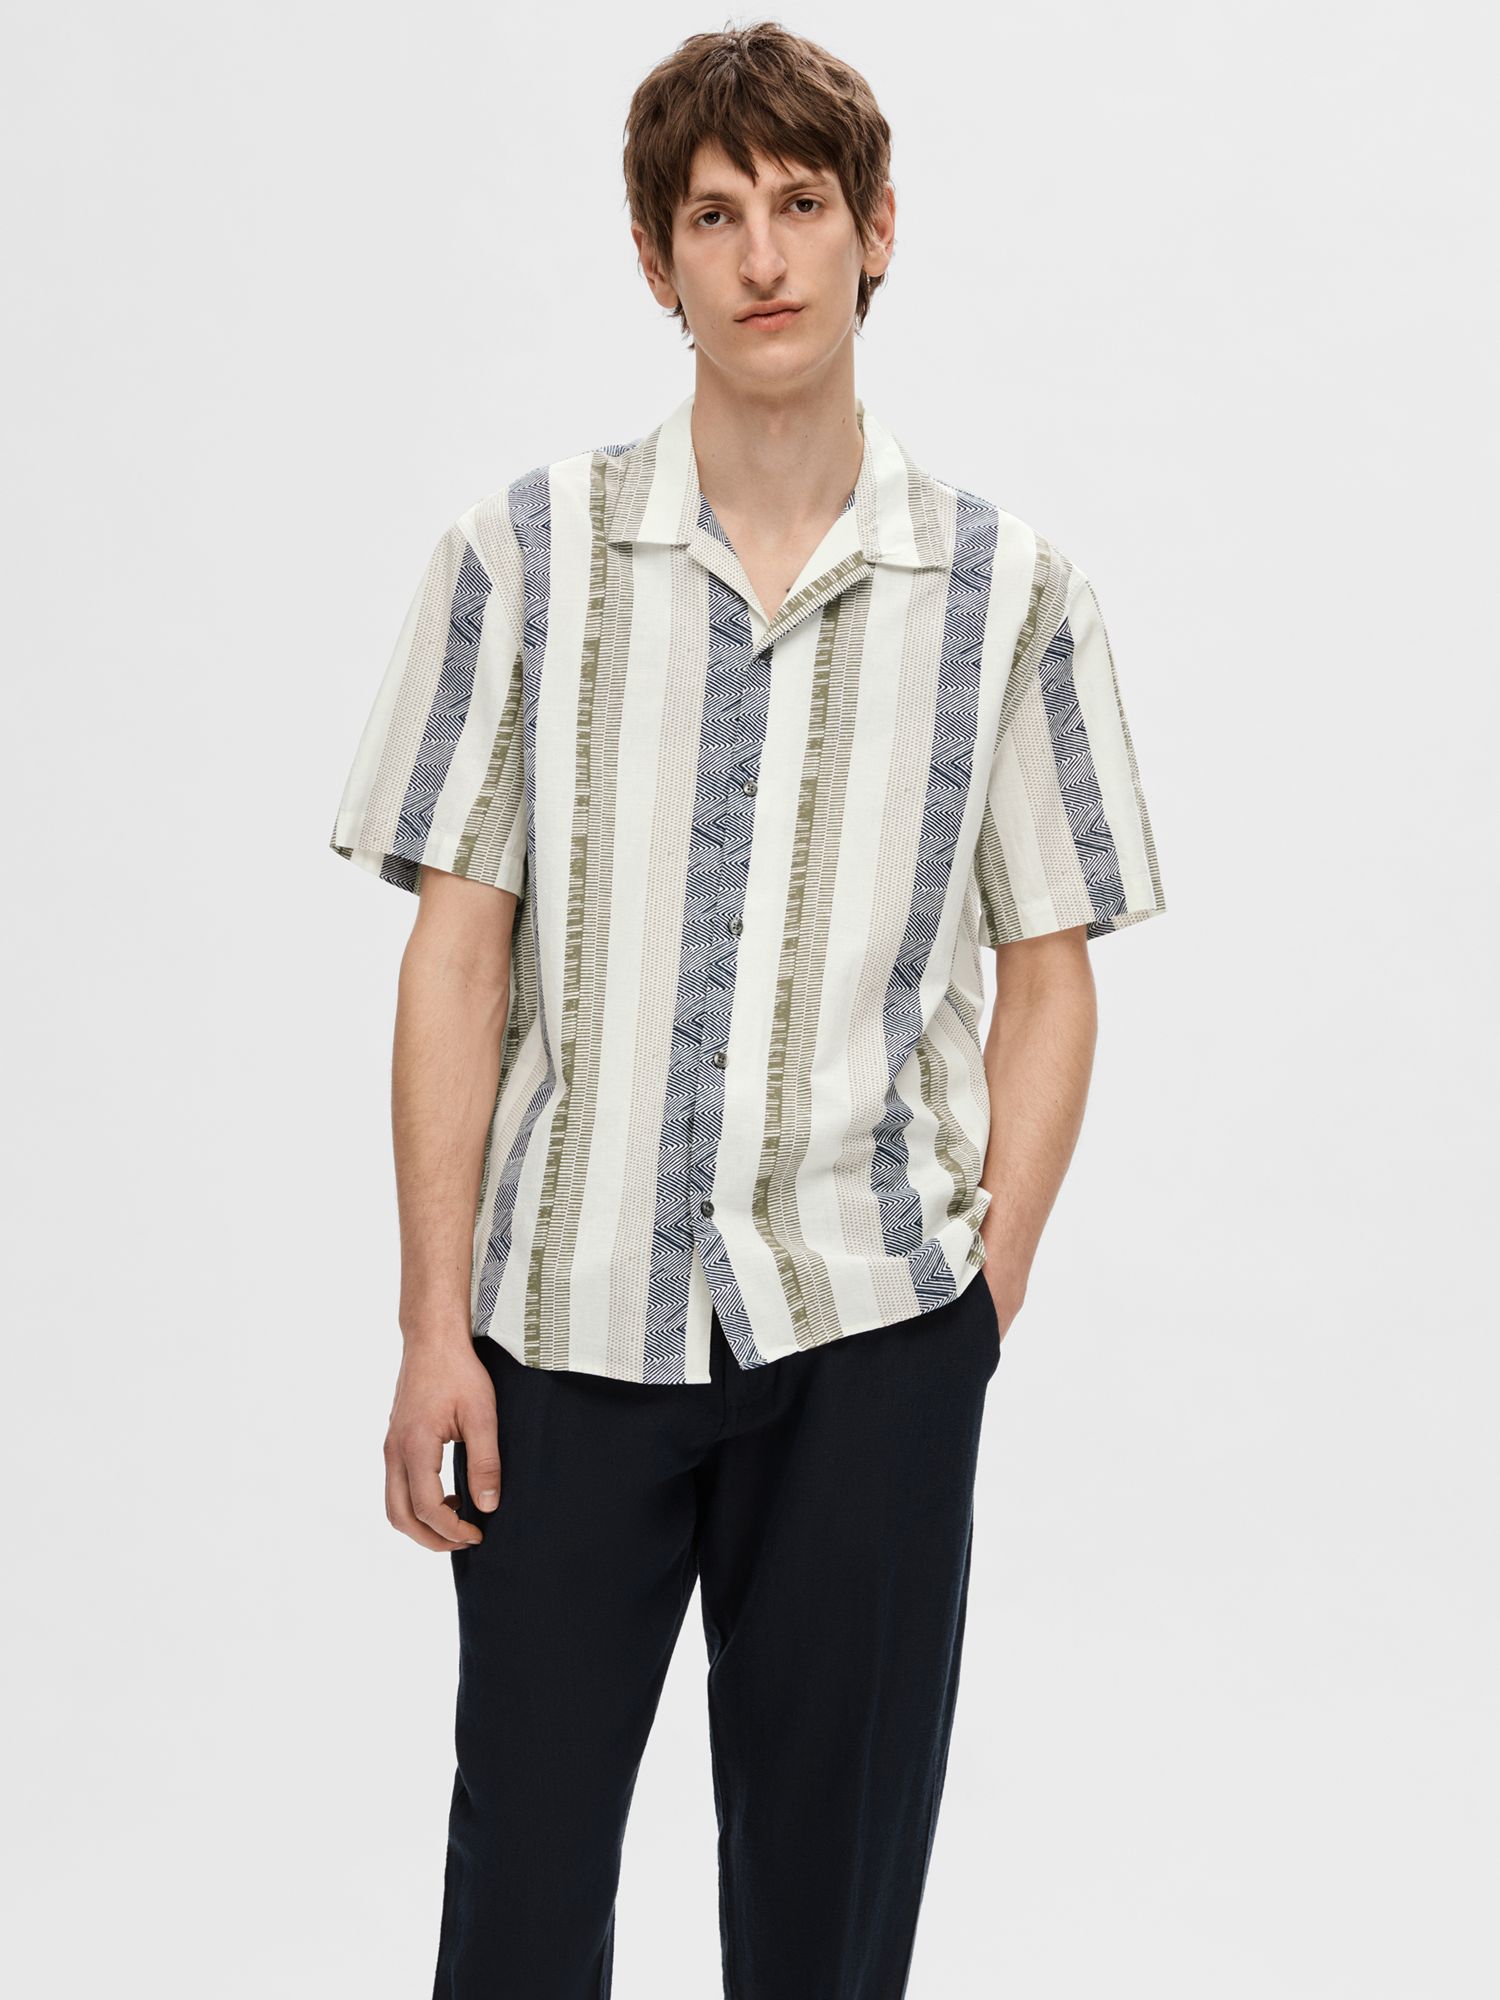 SELECTED HOMME Stripe Linen Cotton Blend Shirt, Egret/Multi, S